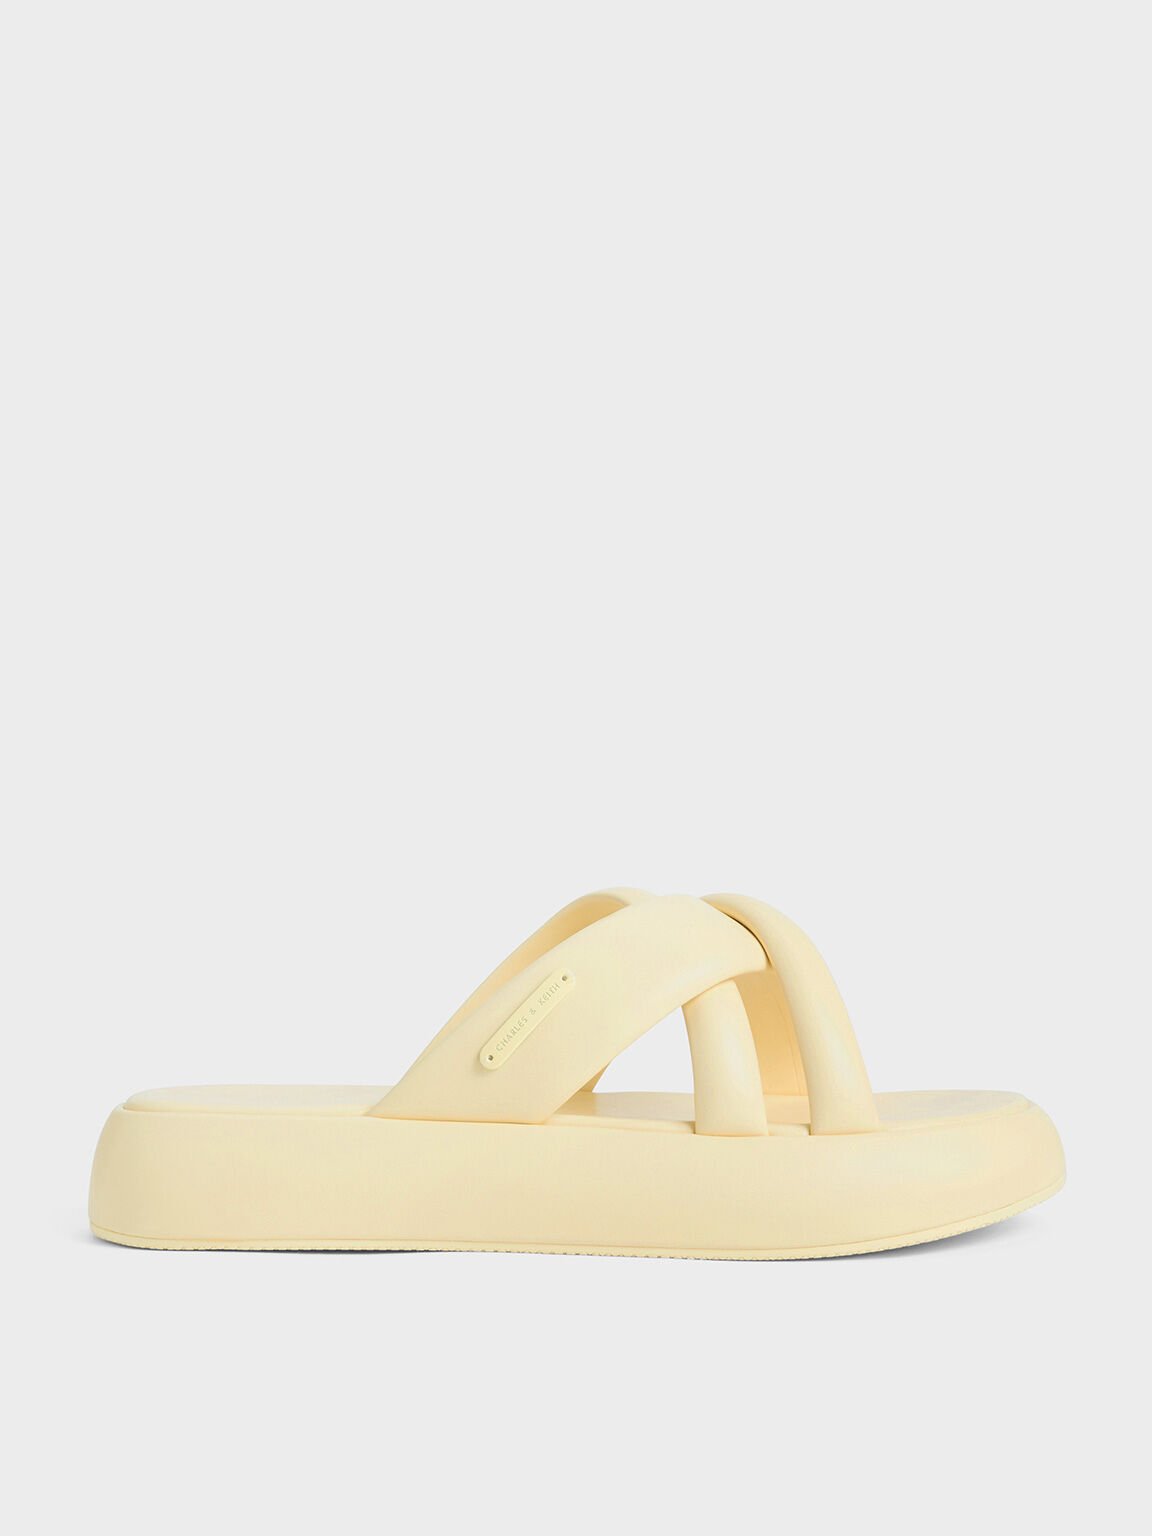 Puffy Crossover-Strap Slide Sandals, Butter, hi-res